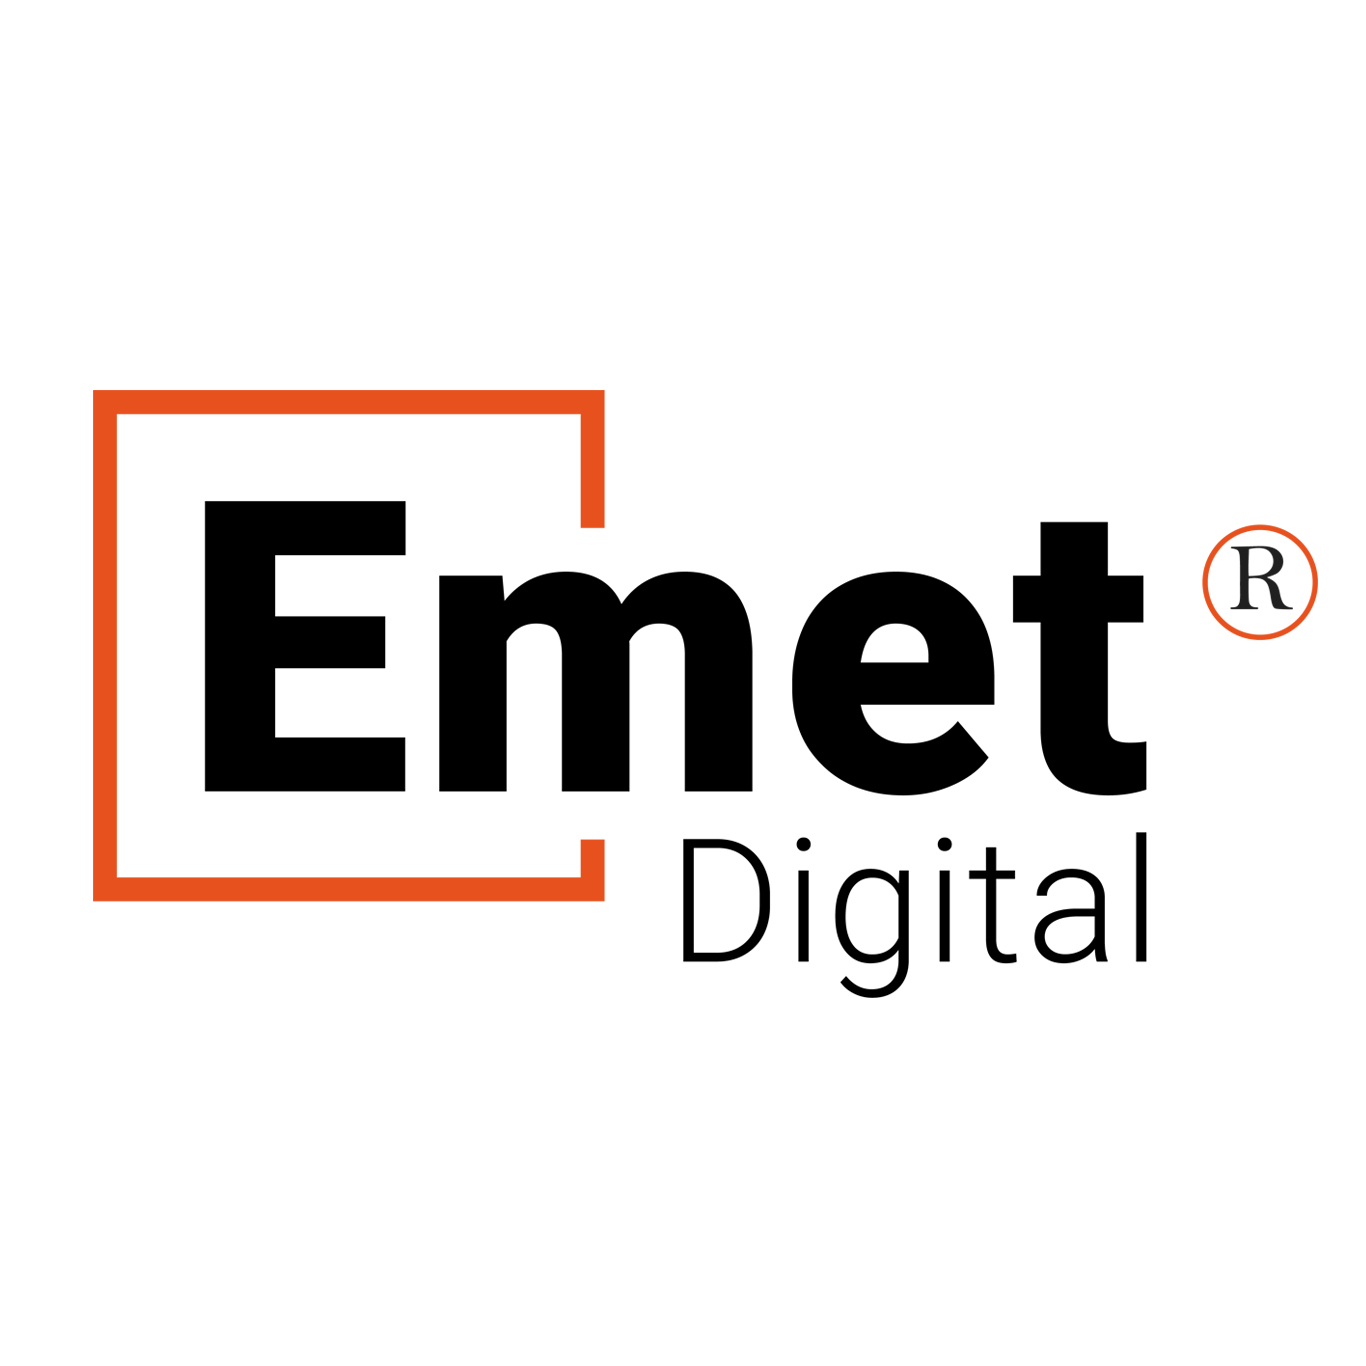 Emet Digital, A Leading Digital Marketing Agency Serving Long Beach, Secures Cov..